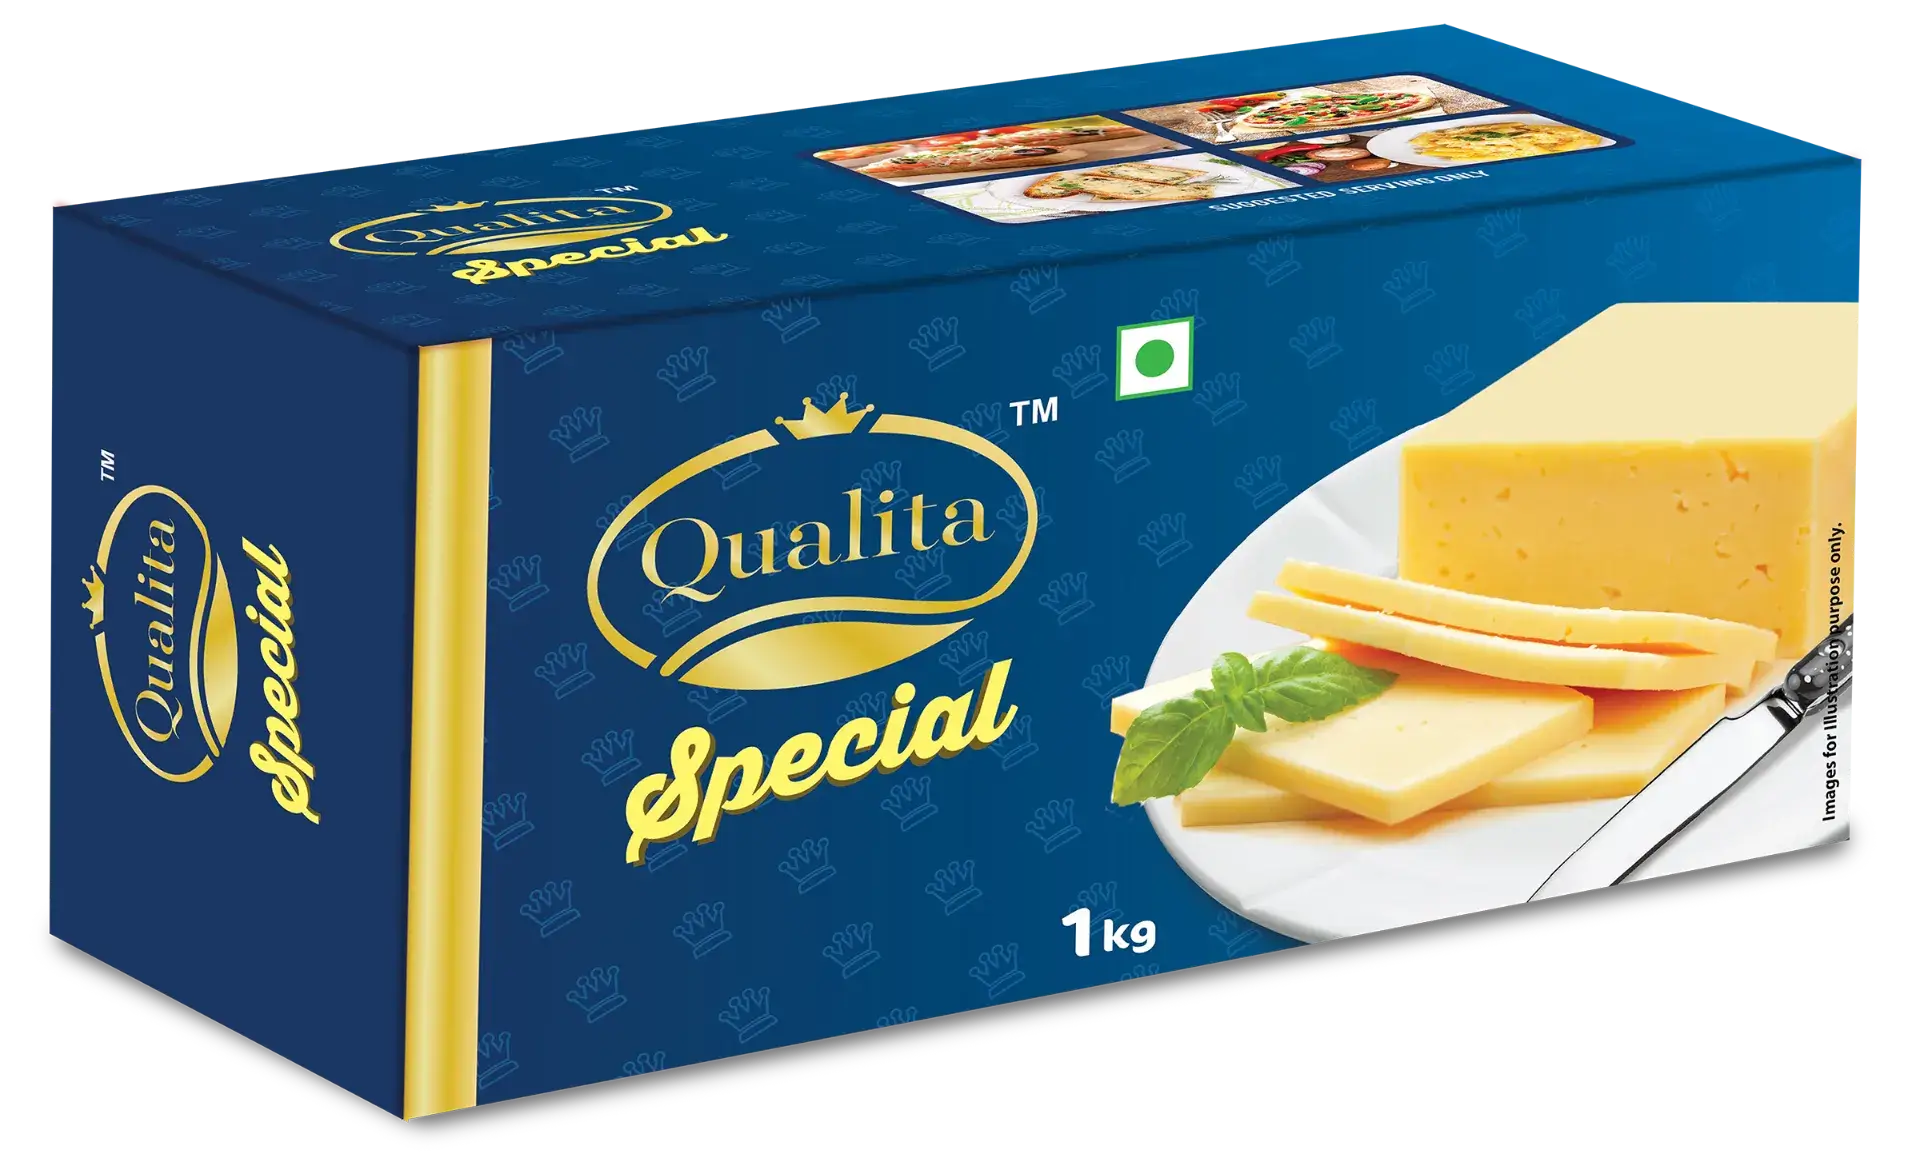 Prabhat Dairy Cheese Processed Qualita SPL Ceka 1kg